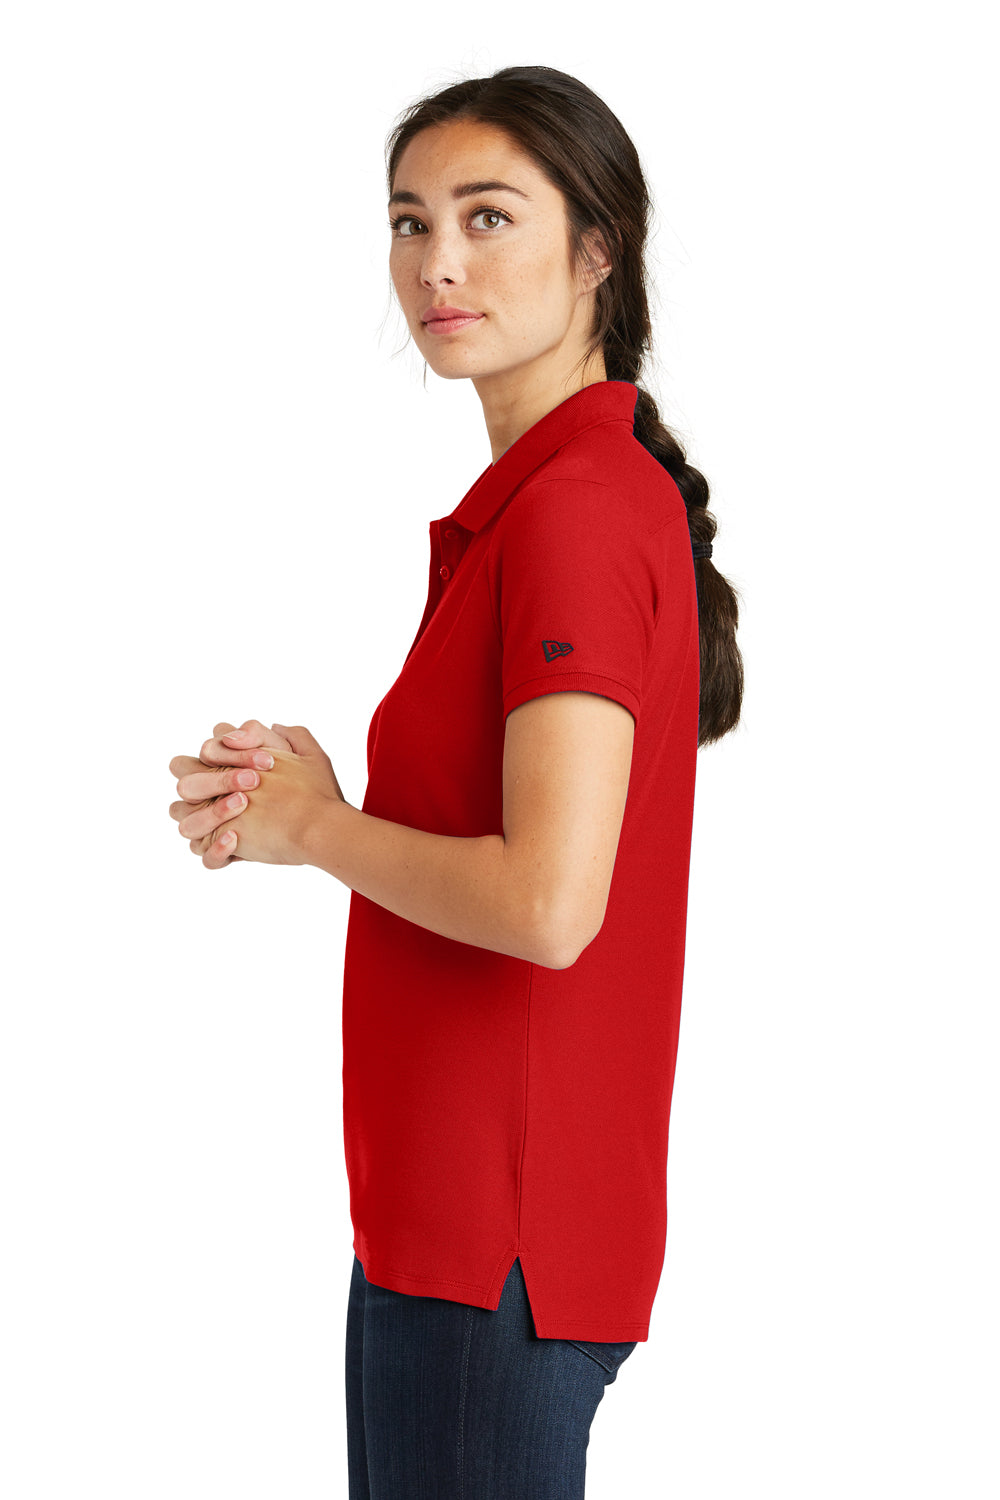 New Era LNEA300 Womens Venue Home Plate Moisture Wicking Short Sleeve Polo Shirt Red Side